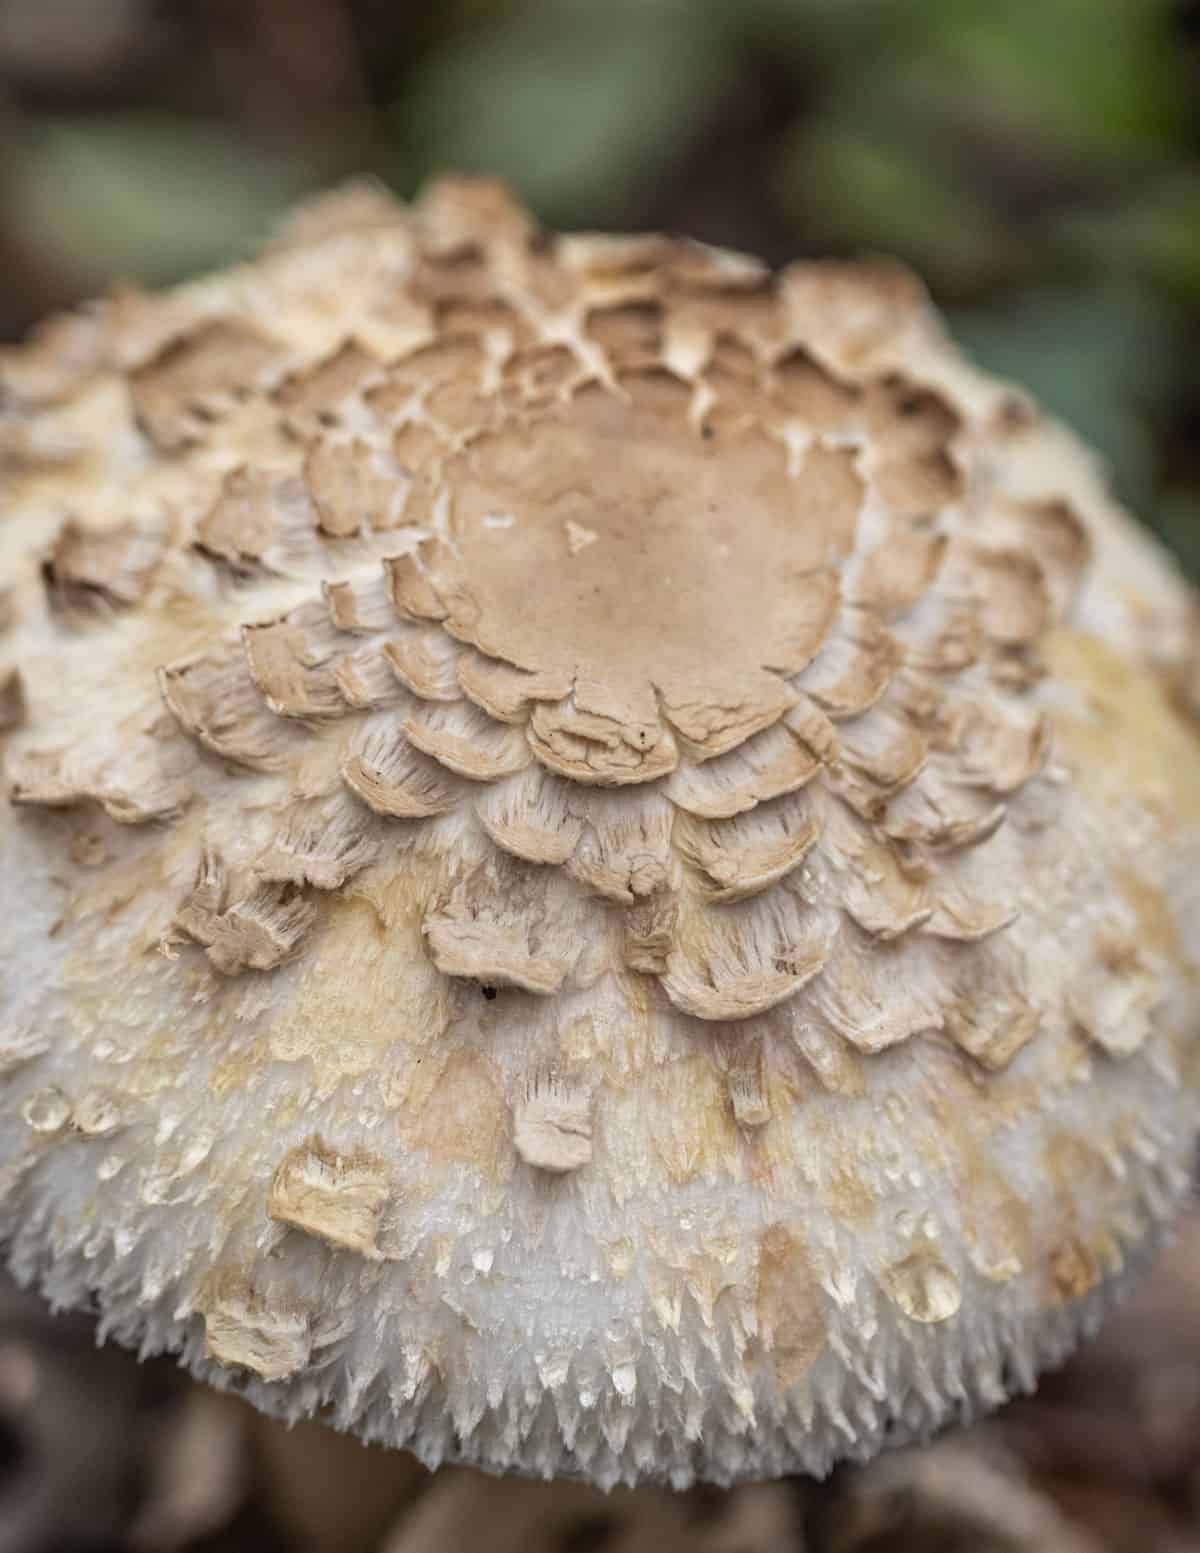 Shaggy parasol mushroom or Chlorophyllum rhacodes cap close up showing shaggy brown scales. 